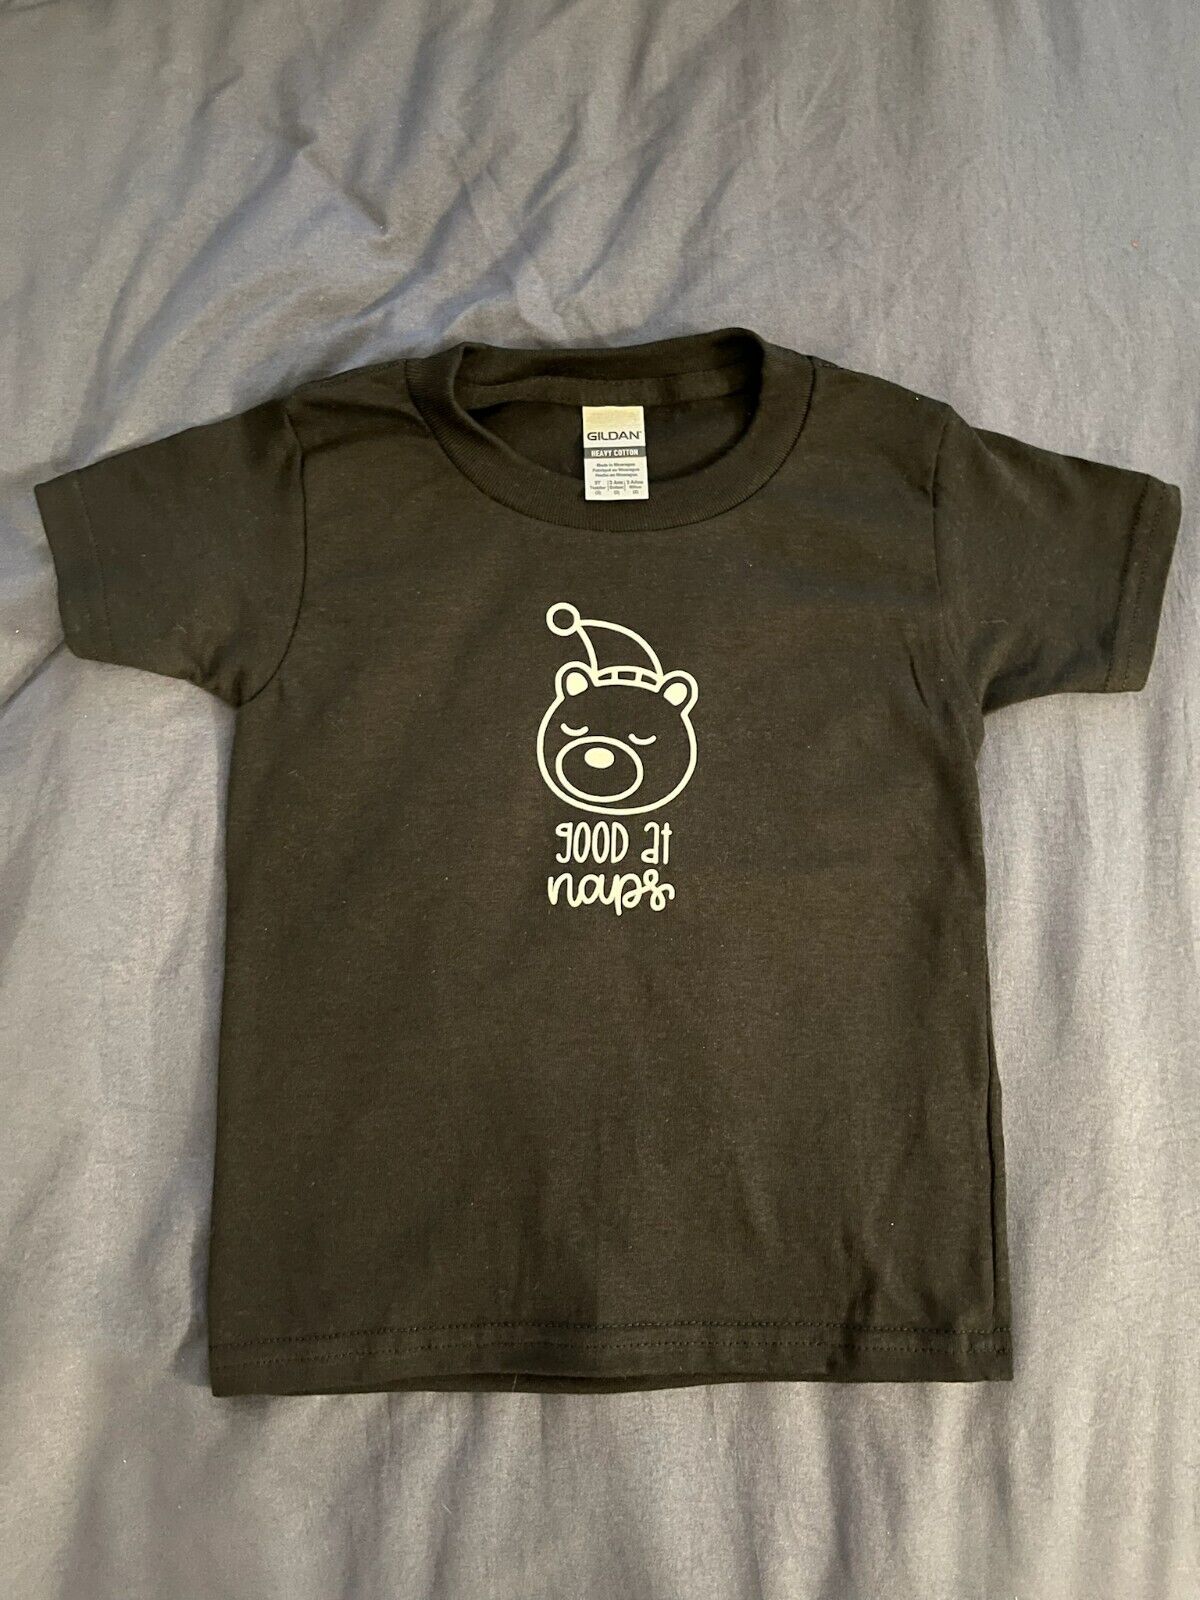 New - Black Glidan Brand Vinyl Printed Toddler T-shirt. 3t Size